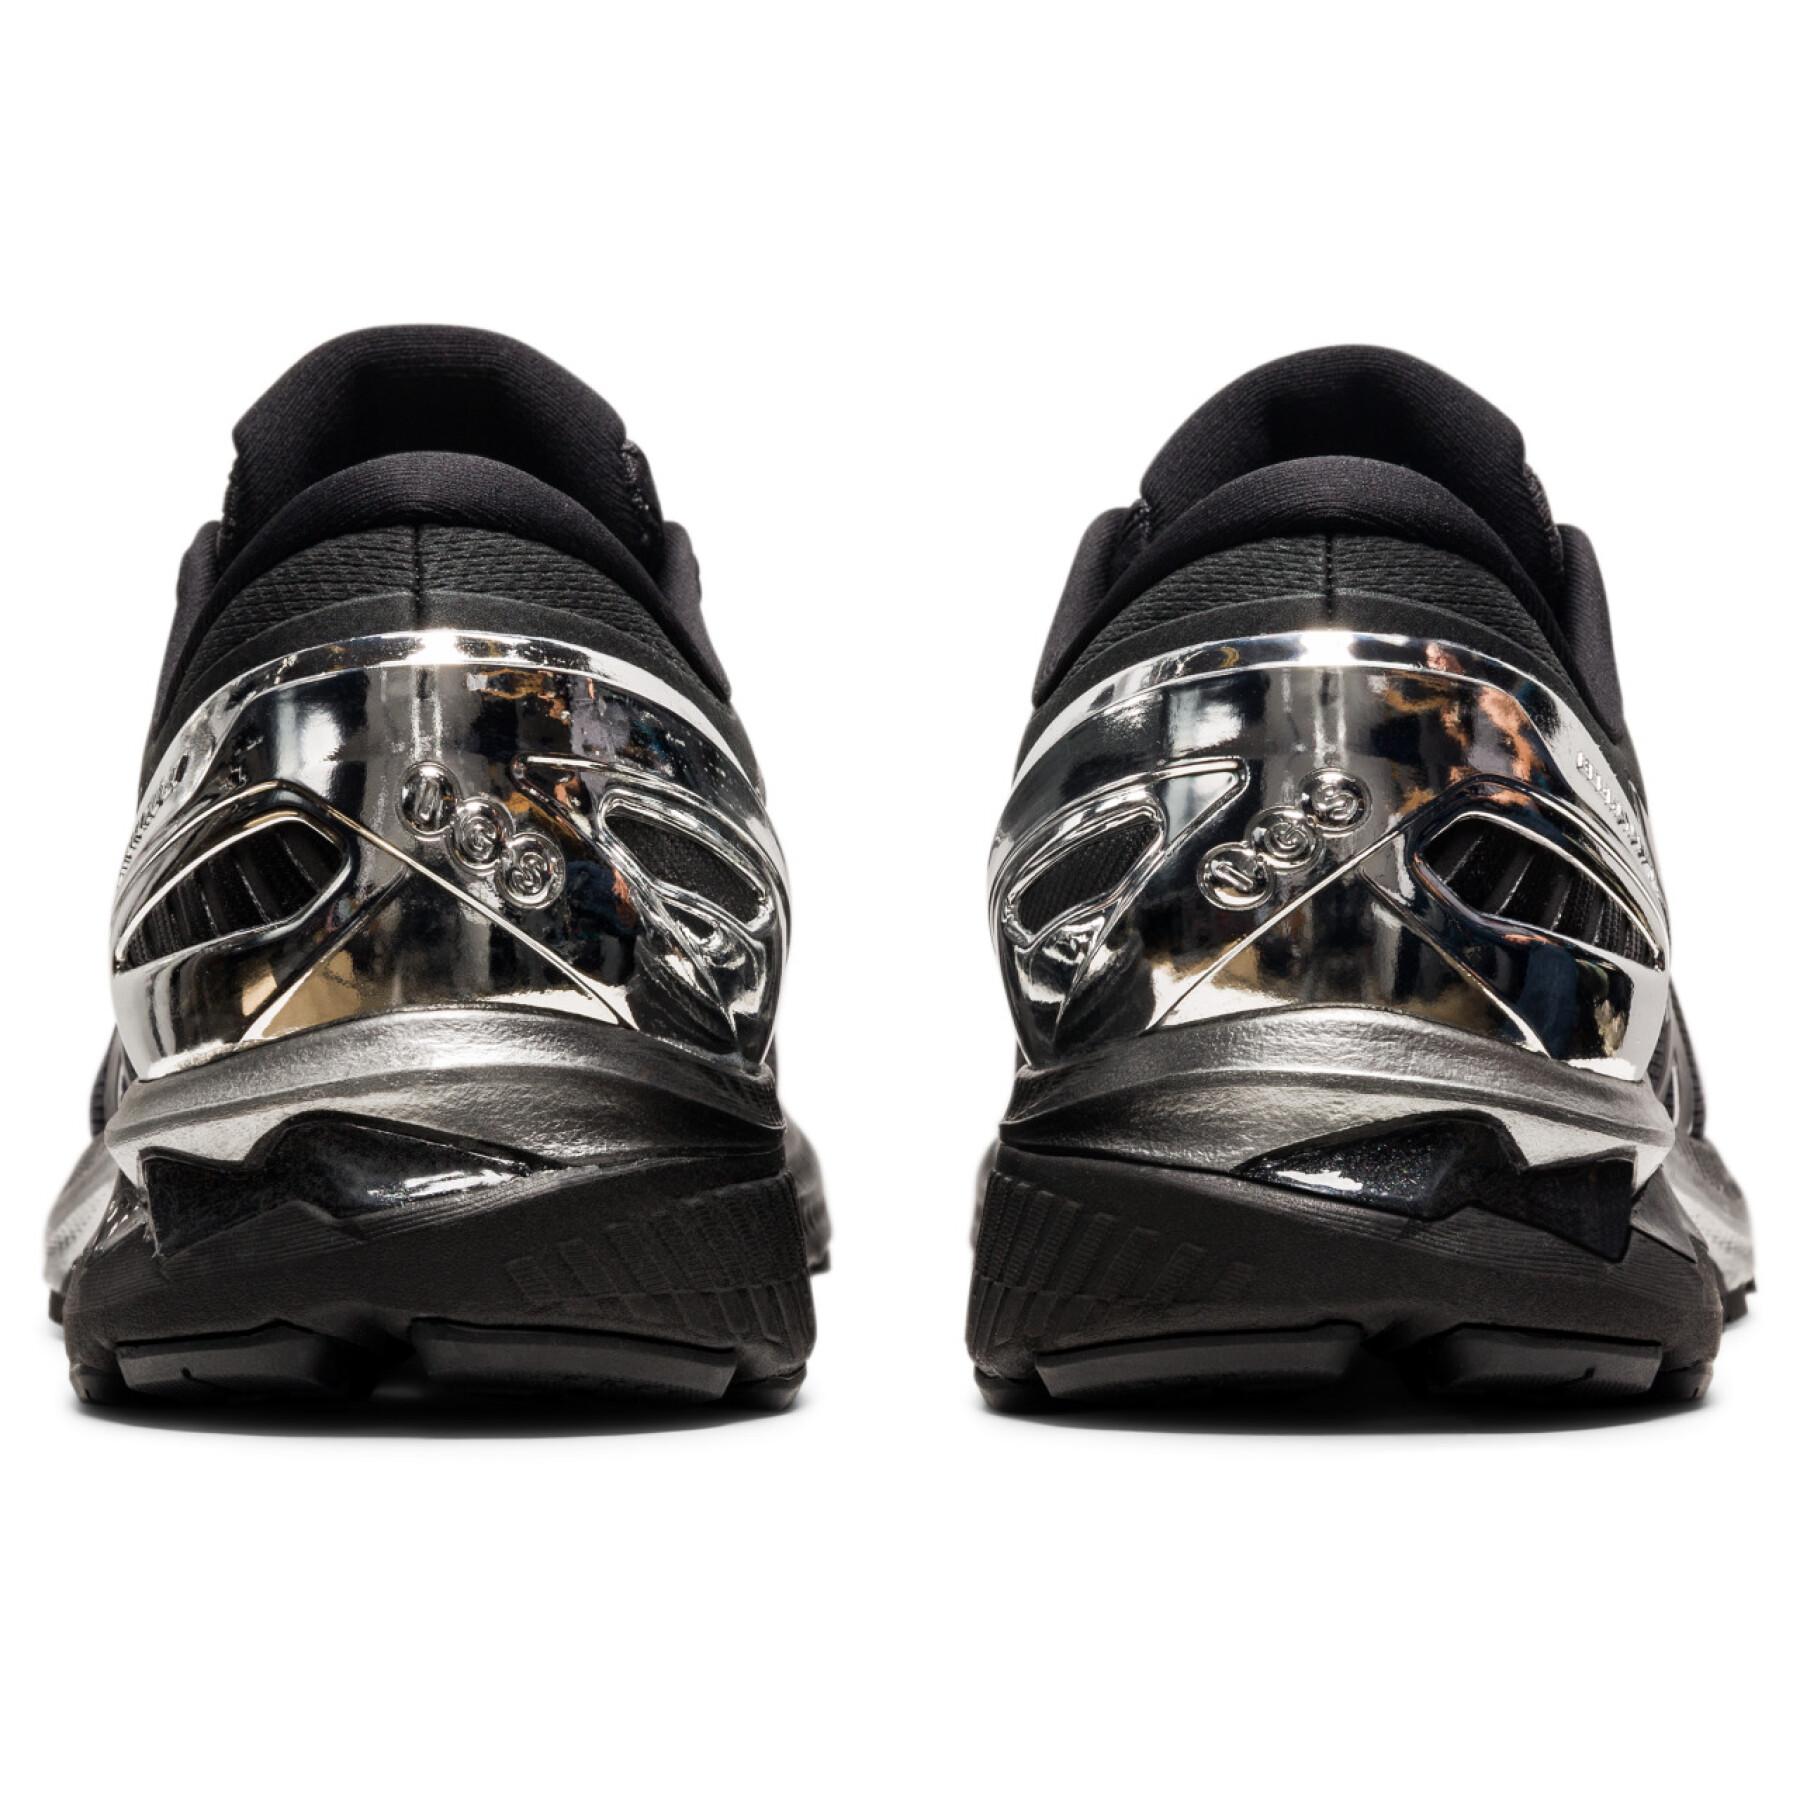 Schuhe Asics Gel-Kayano 27 Platinum